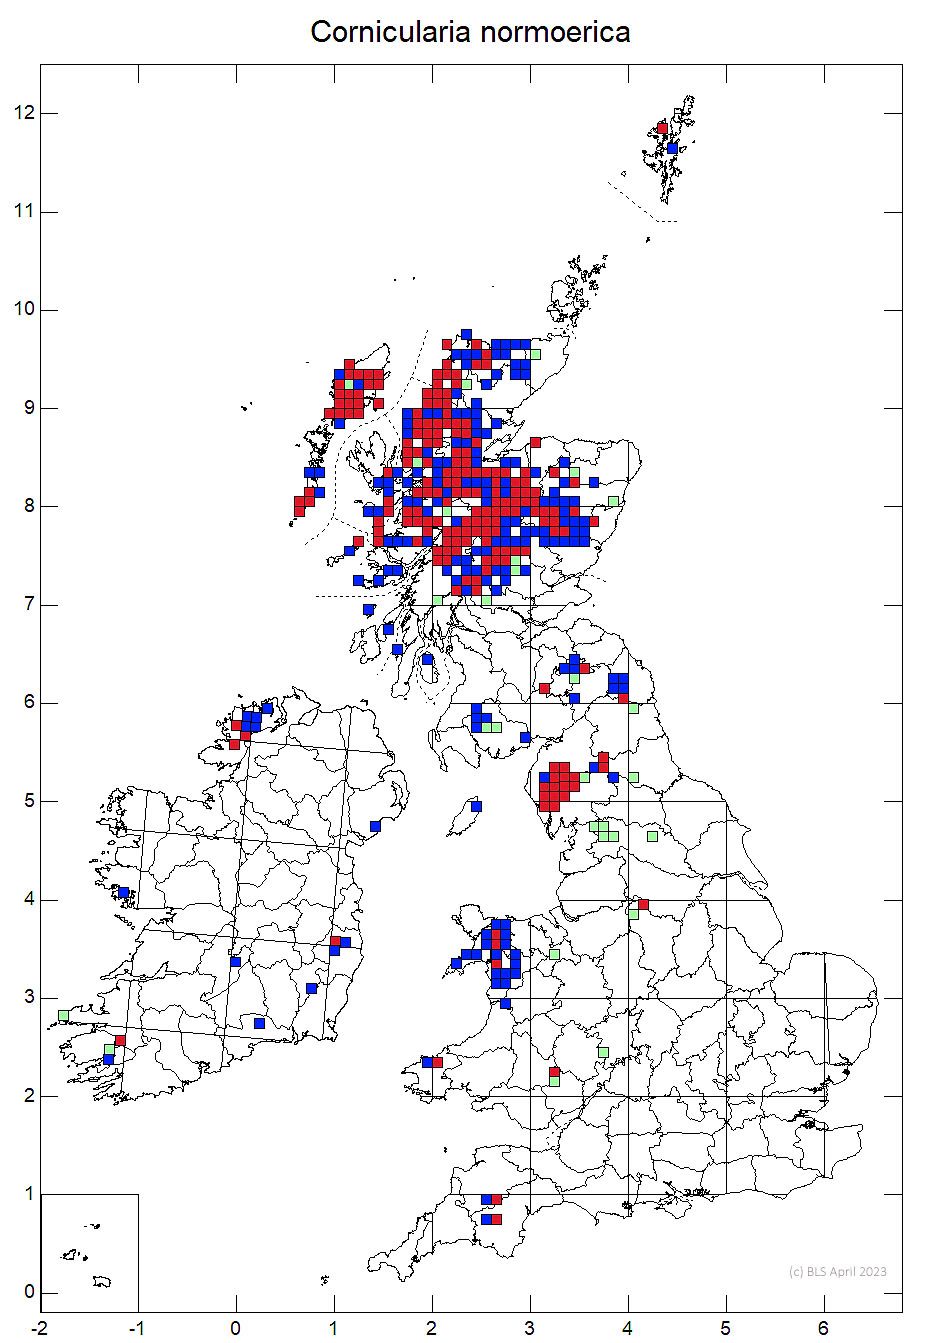 Cornicularia normoerica 10km sq distribution map